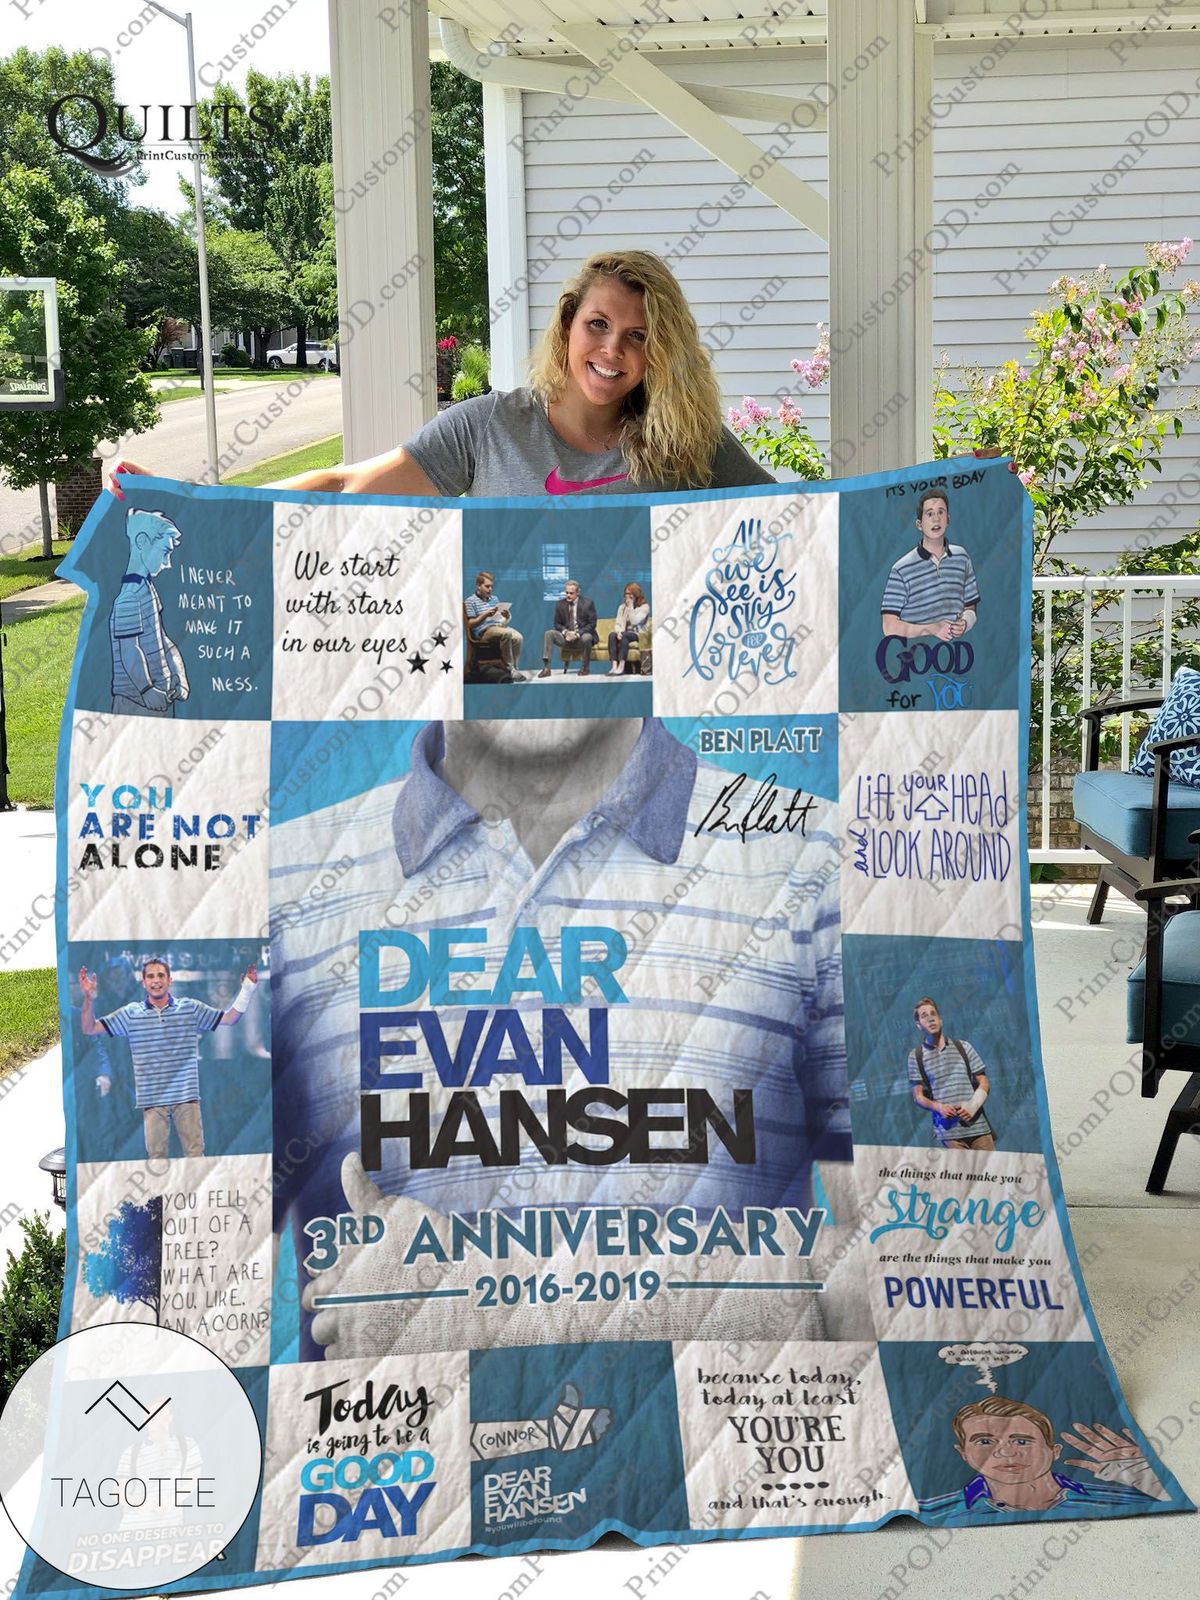 Broadway Dear Evan Hansen Musical 3rd Anniversary Quilt Blanket